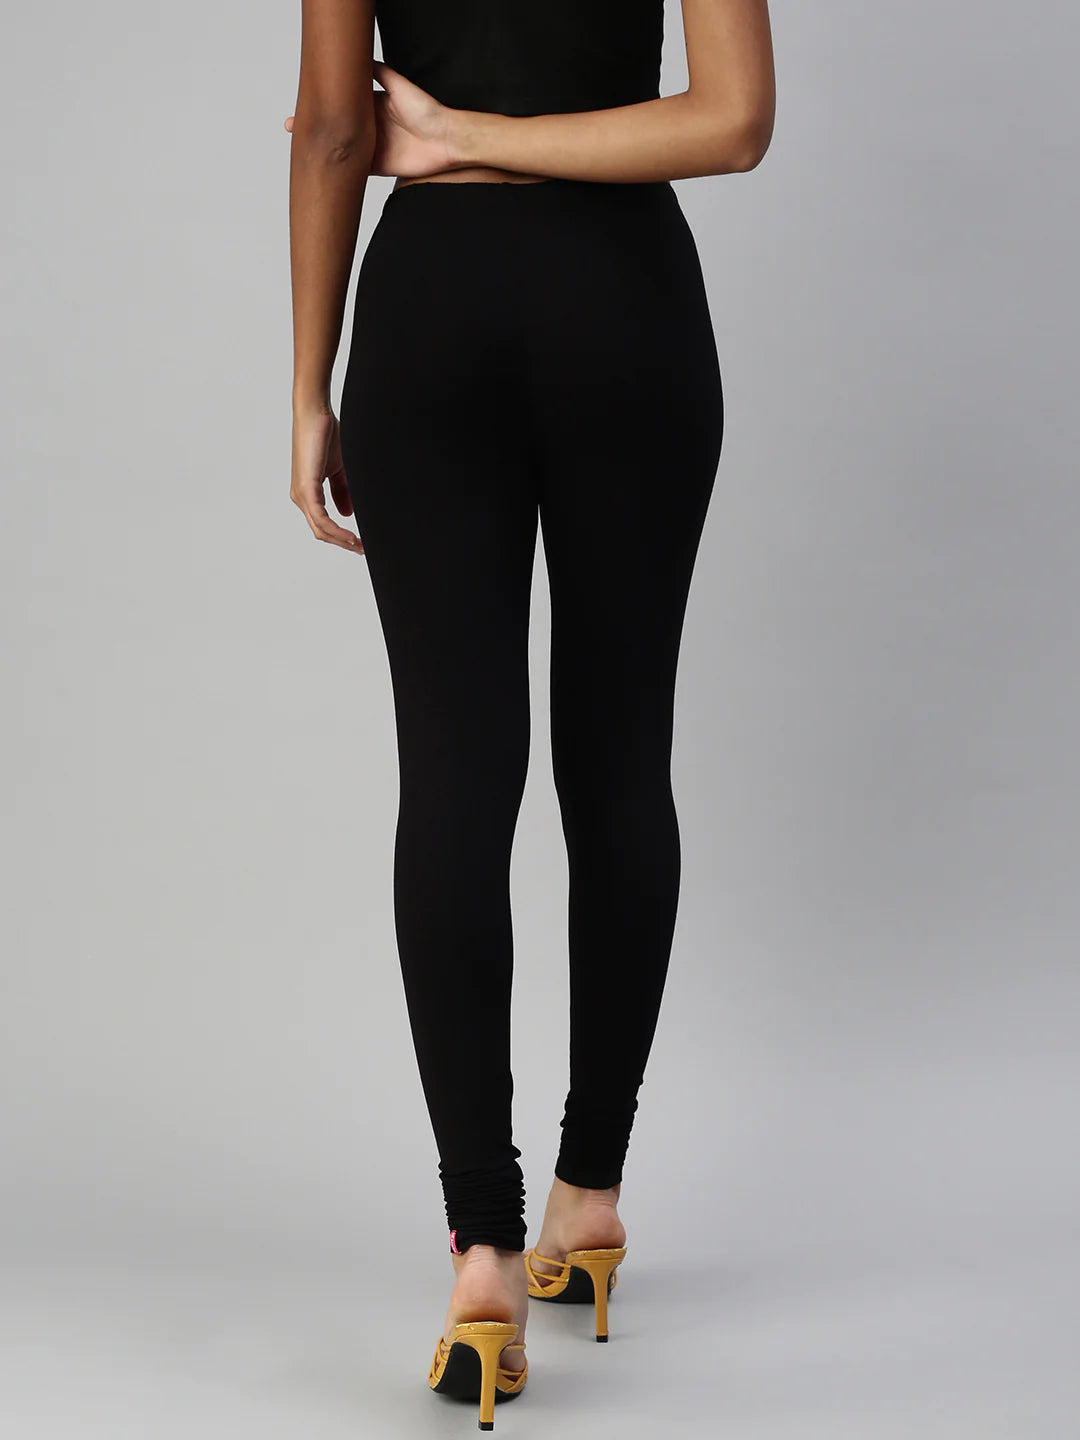 Perfect Fit Pocket Capri Leggings - Black | Leggings are not pants, Outfits  with leggings, High quality leggings